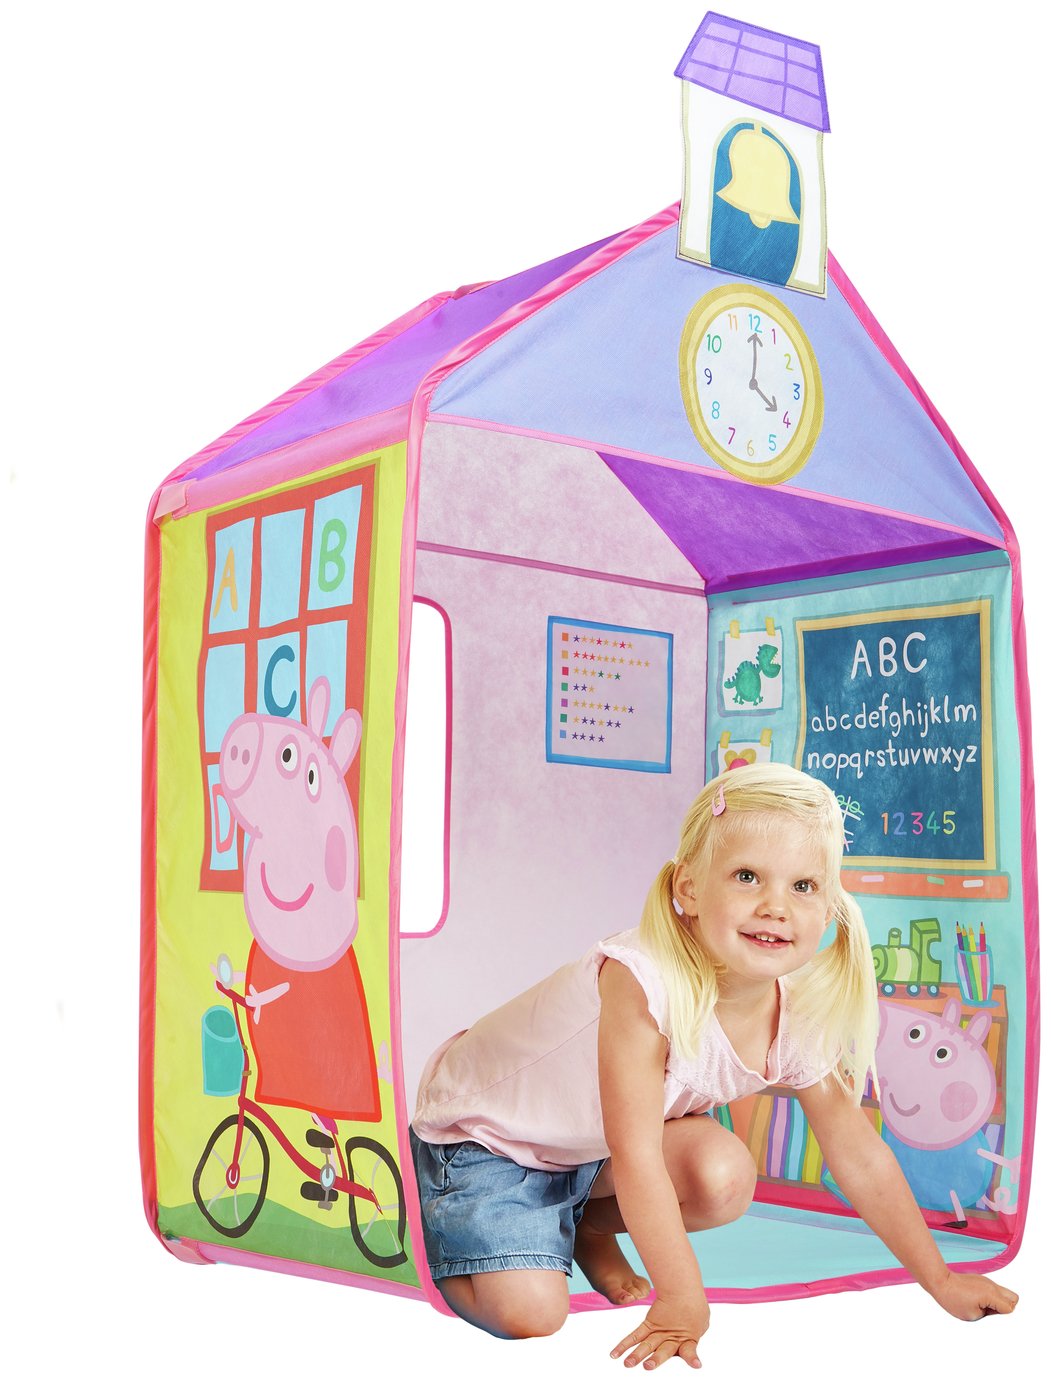 Peppa Pig Pop Up School Playhouse Tent Review